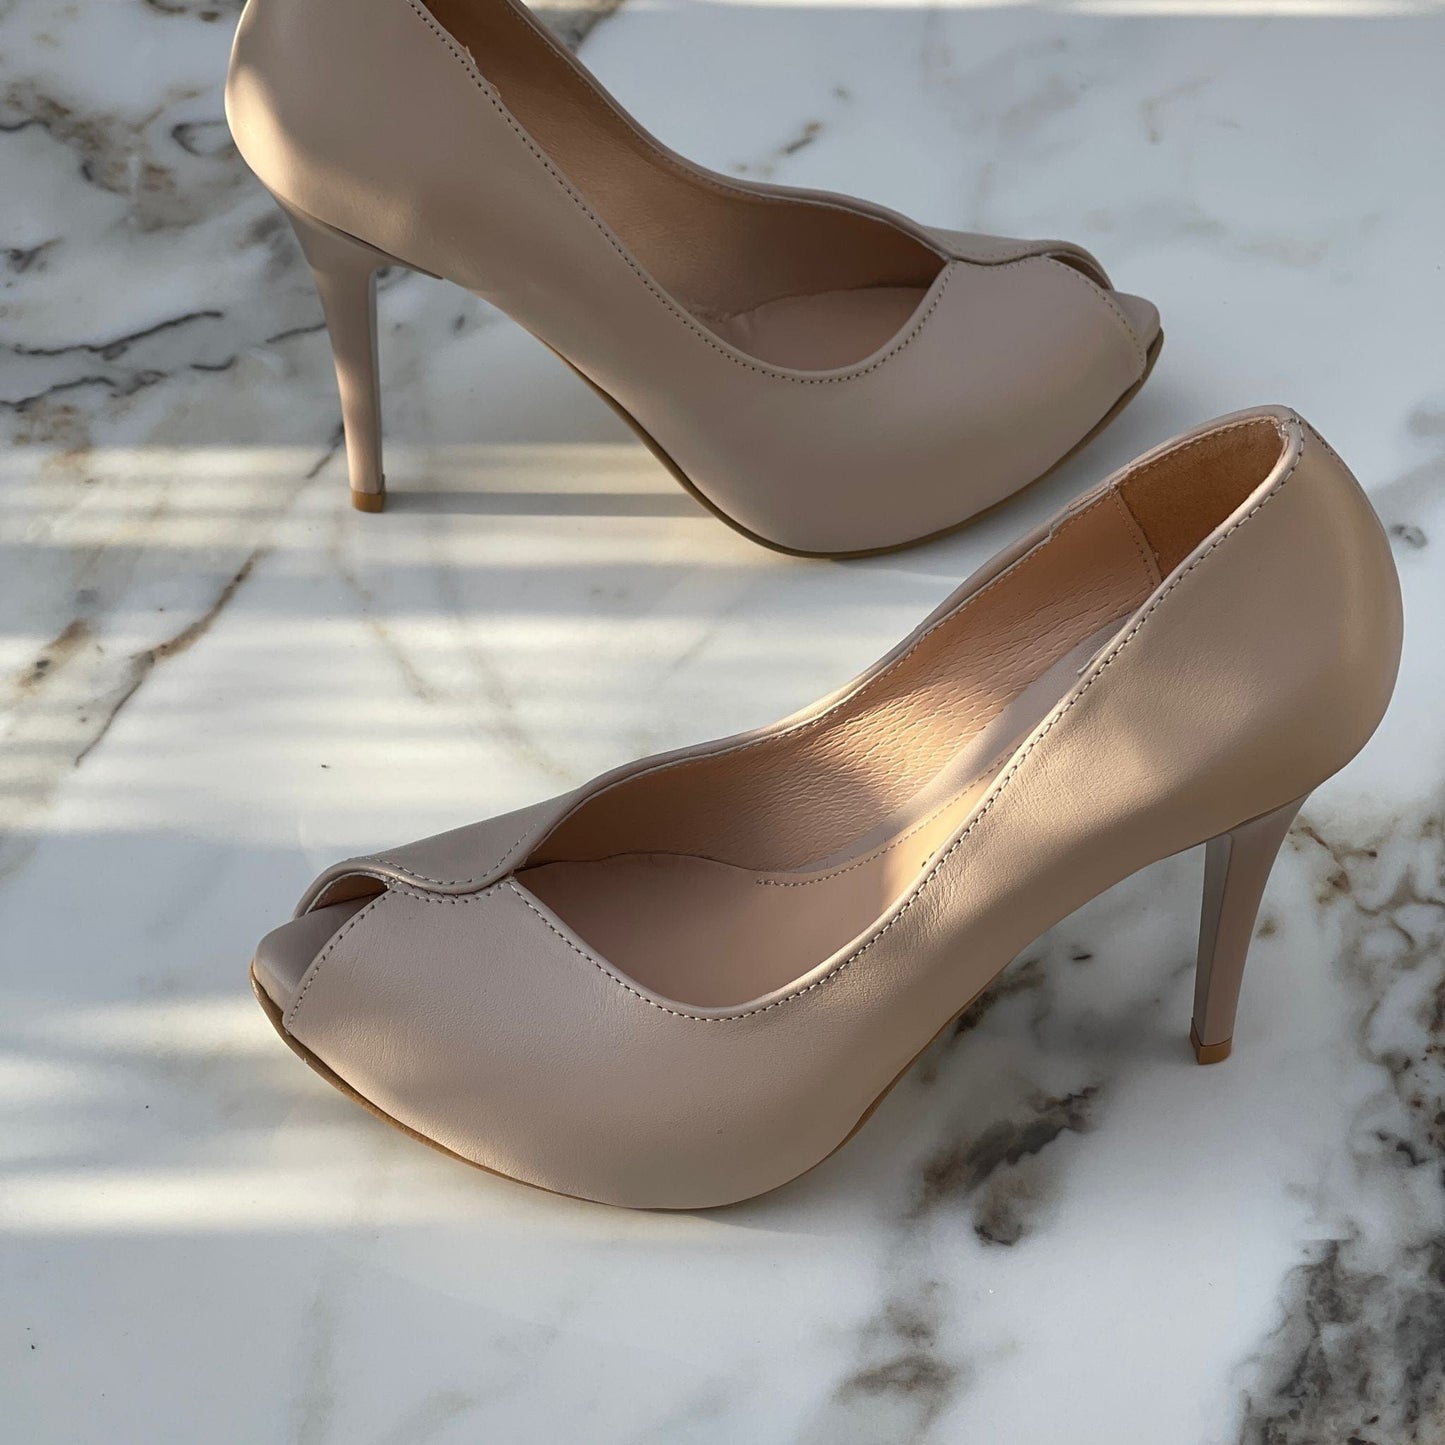 Petite peep toe court heels in nude leather